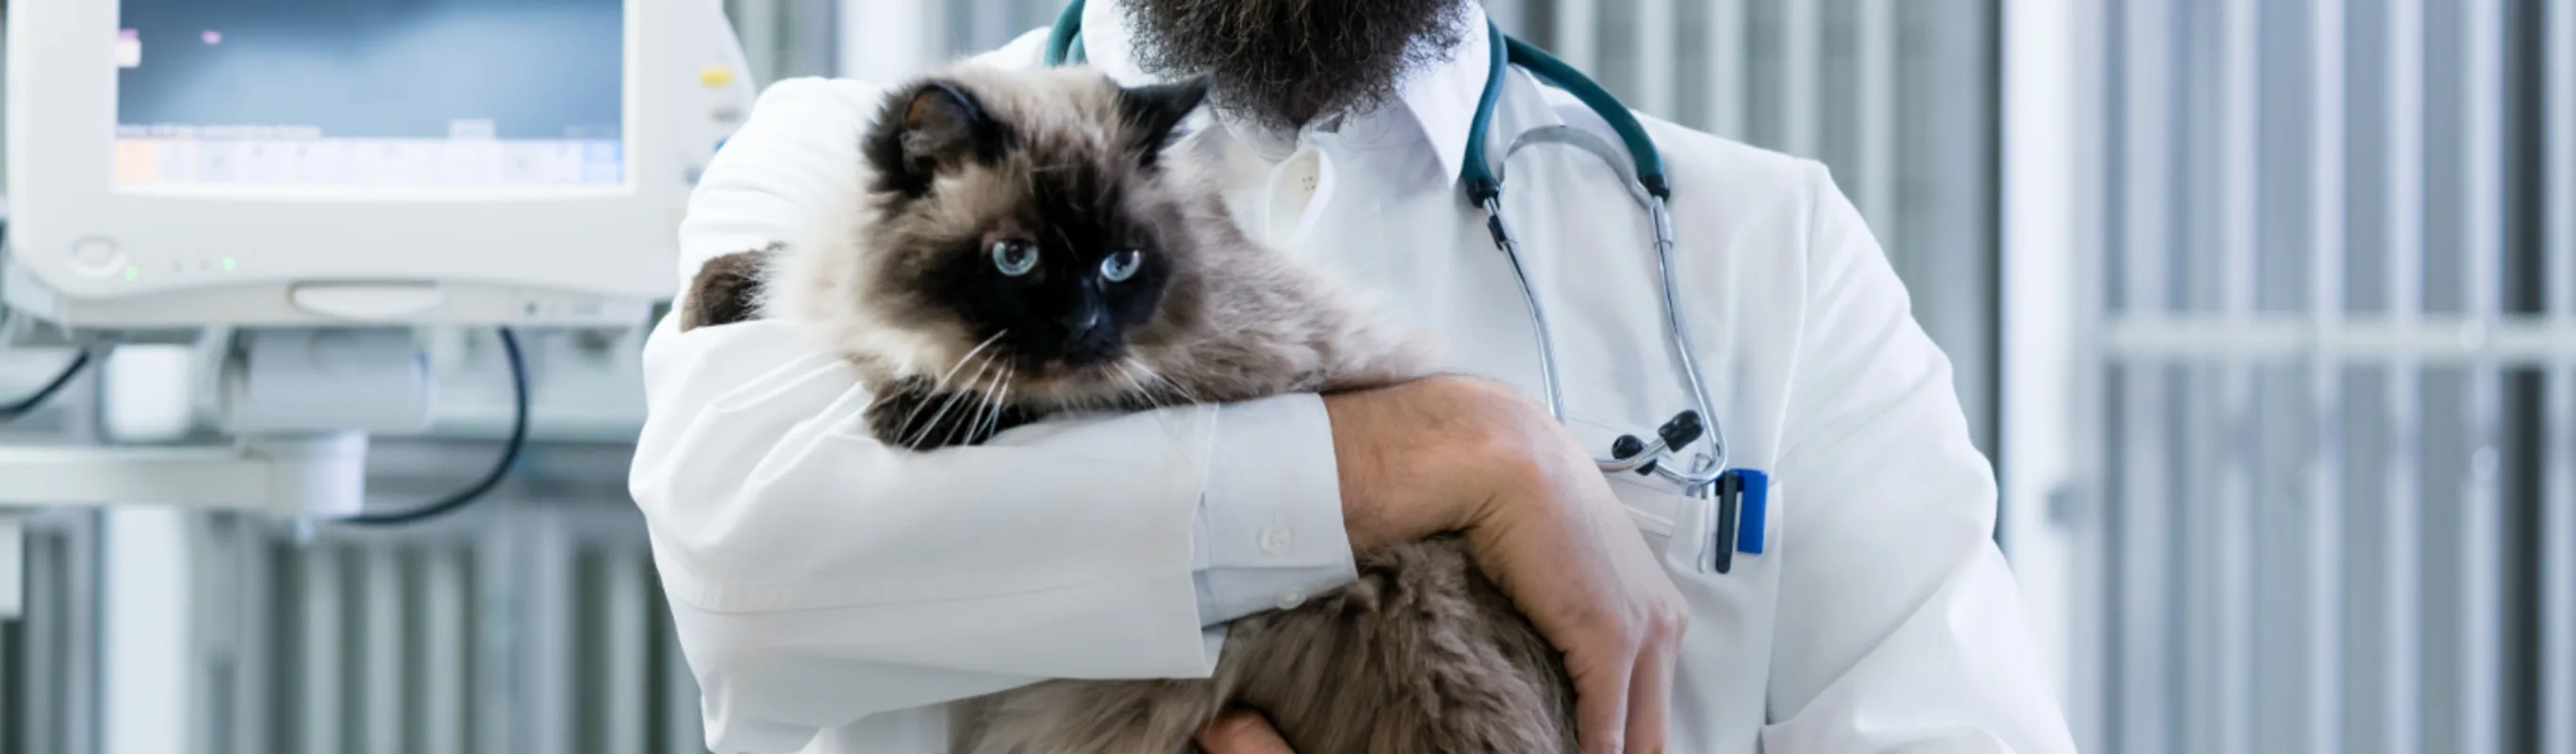 Veterinarian Holding Gray Cat